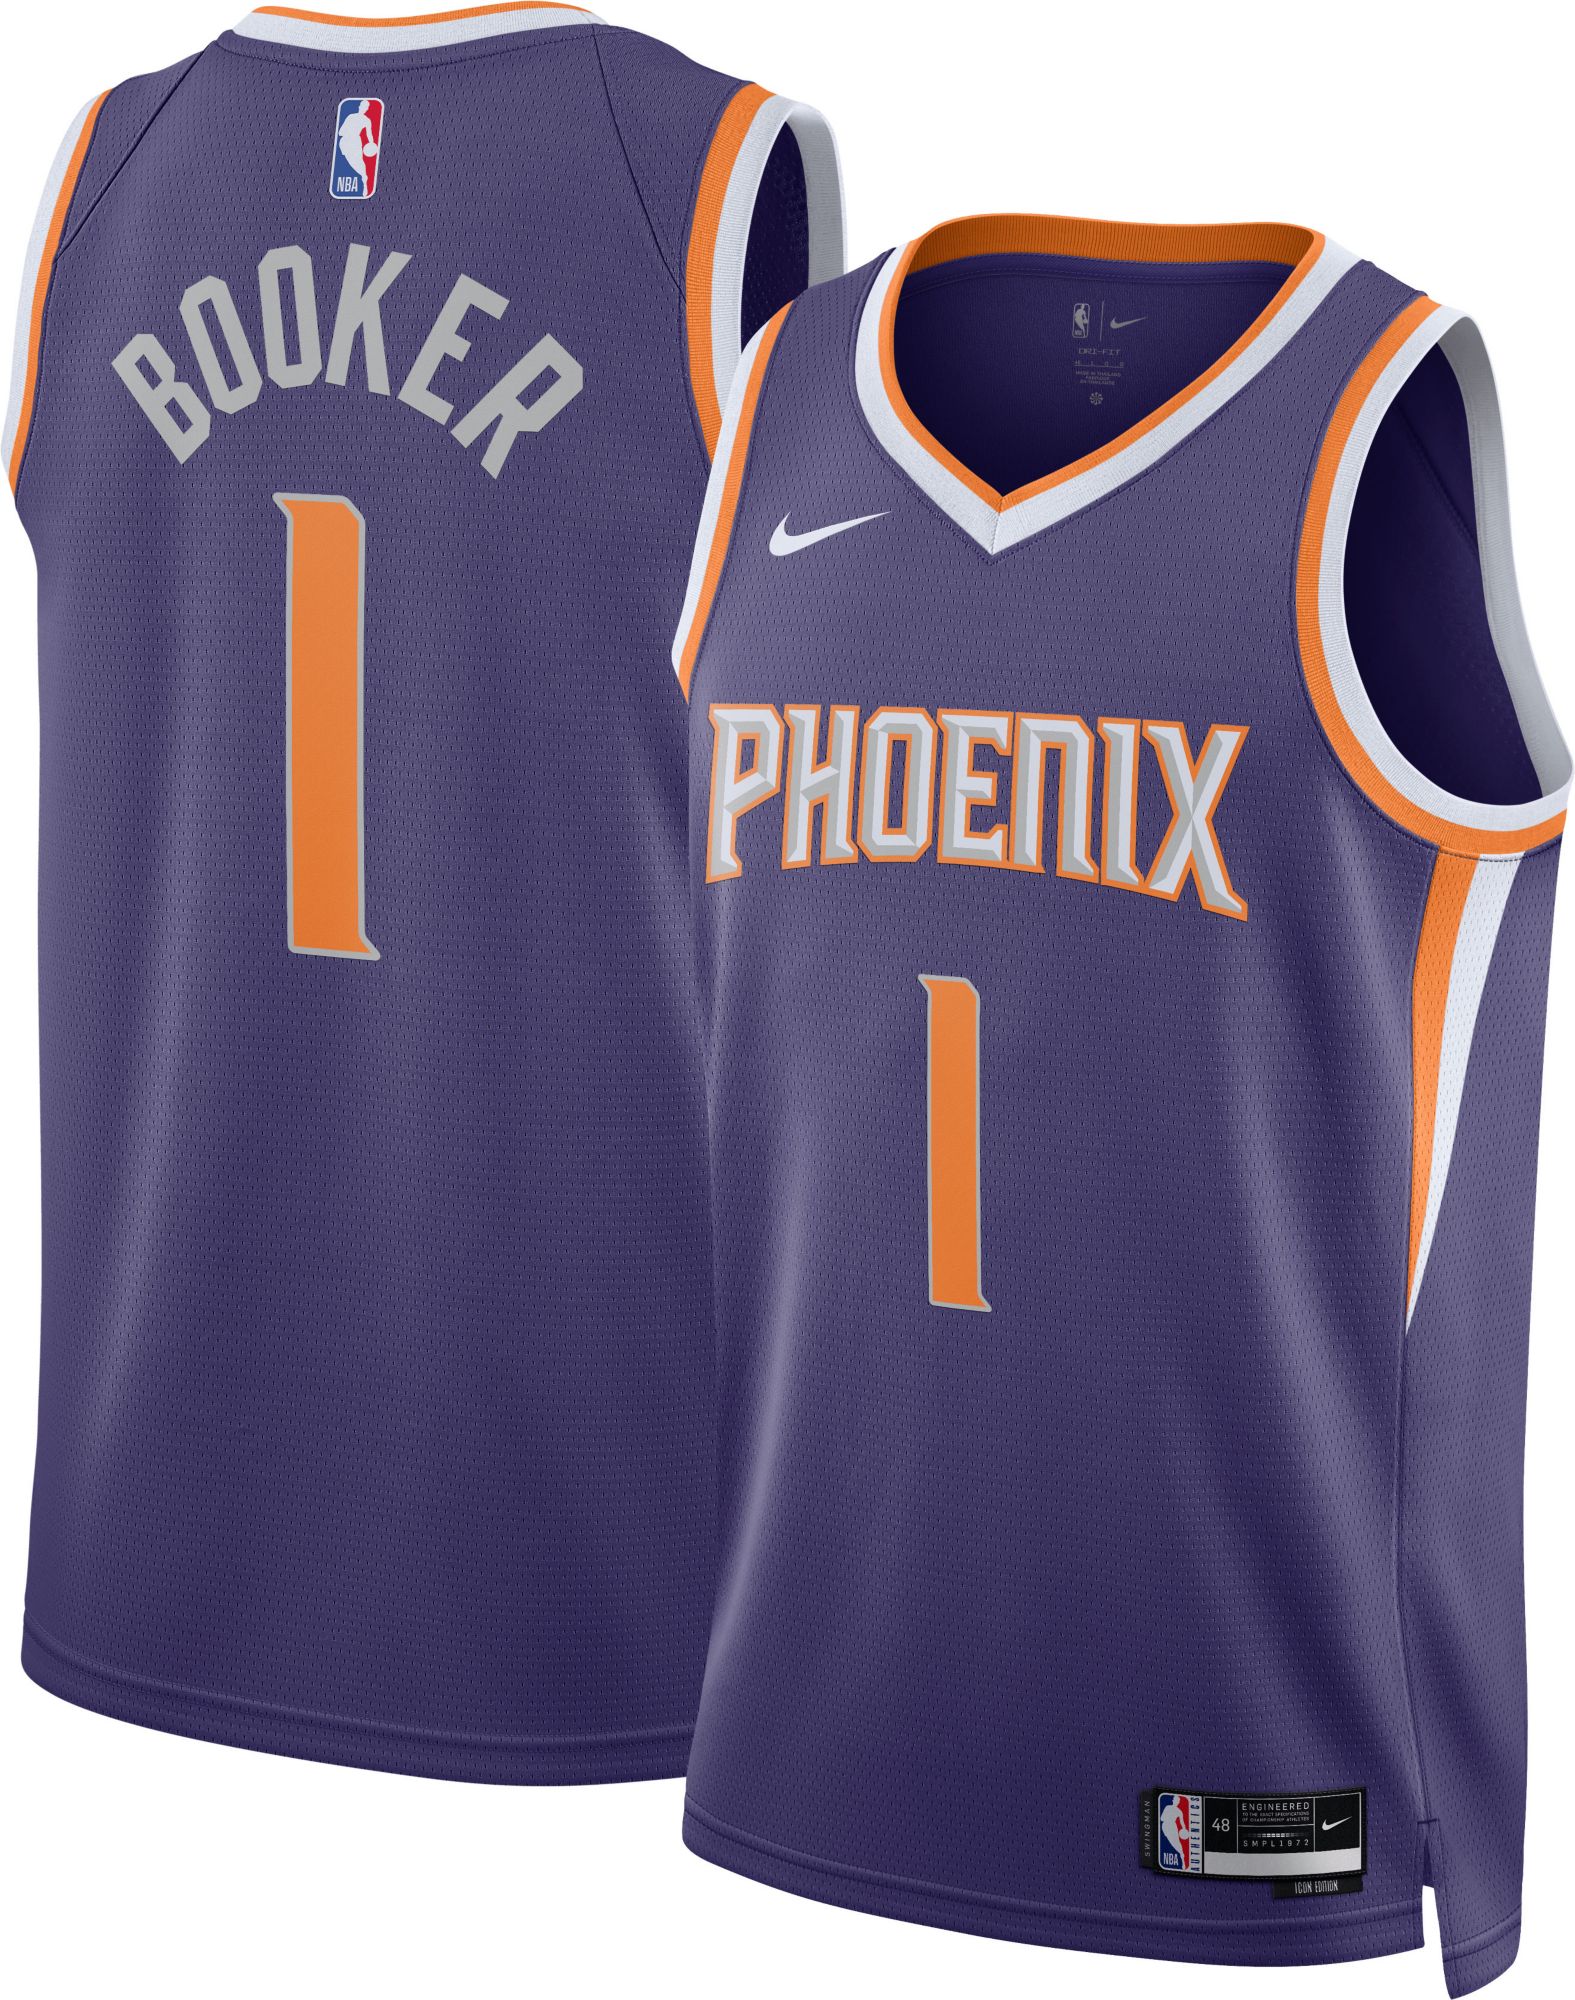 Regata NBA Phoenix Suns - Devin Booker nº 1 - Swingman Edition - Roxa